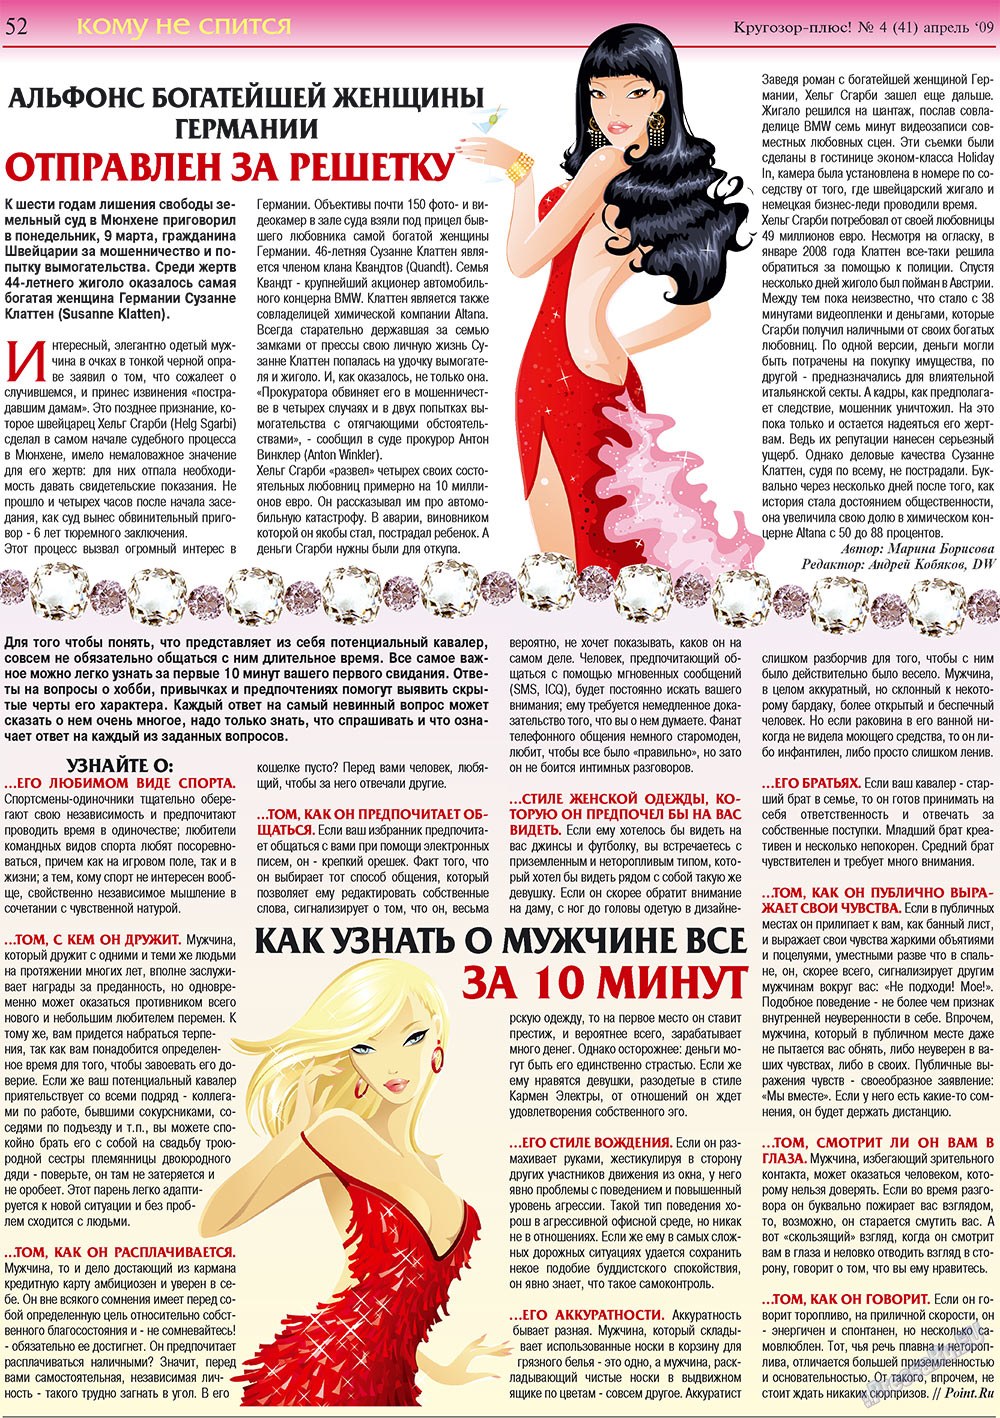 Кругозор плюс! (газета). 2009 год, номер 4, стр. 52